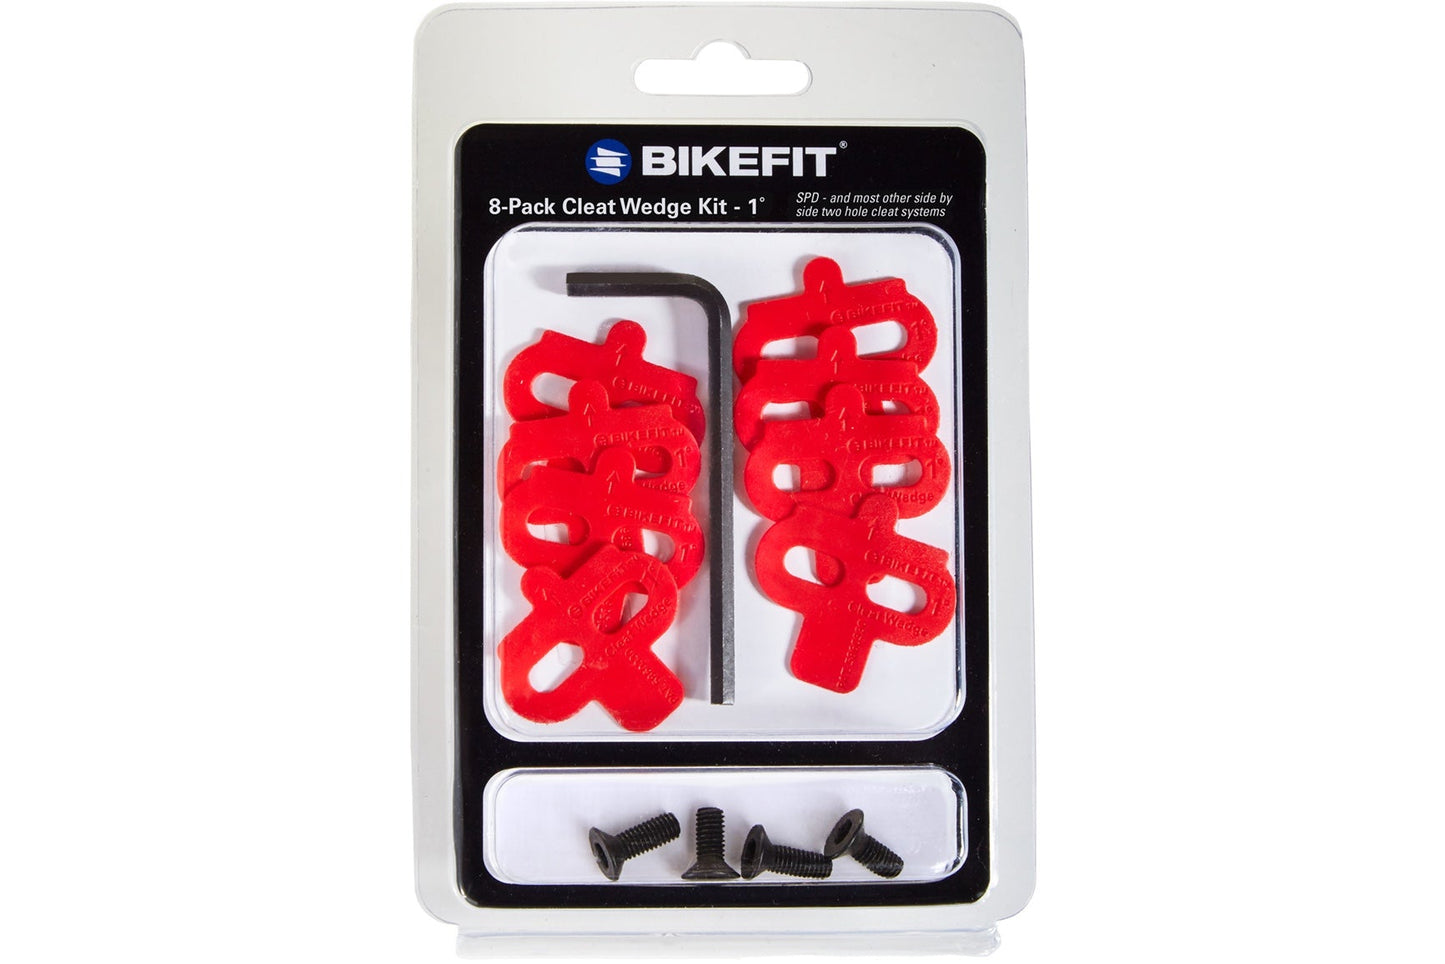 BikeFit Cleat Wedges shown in packaging